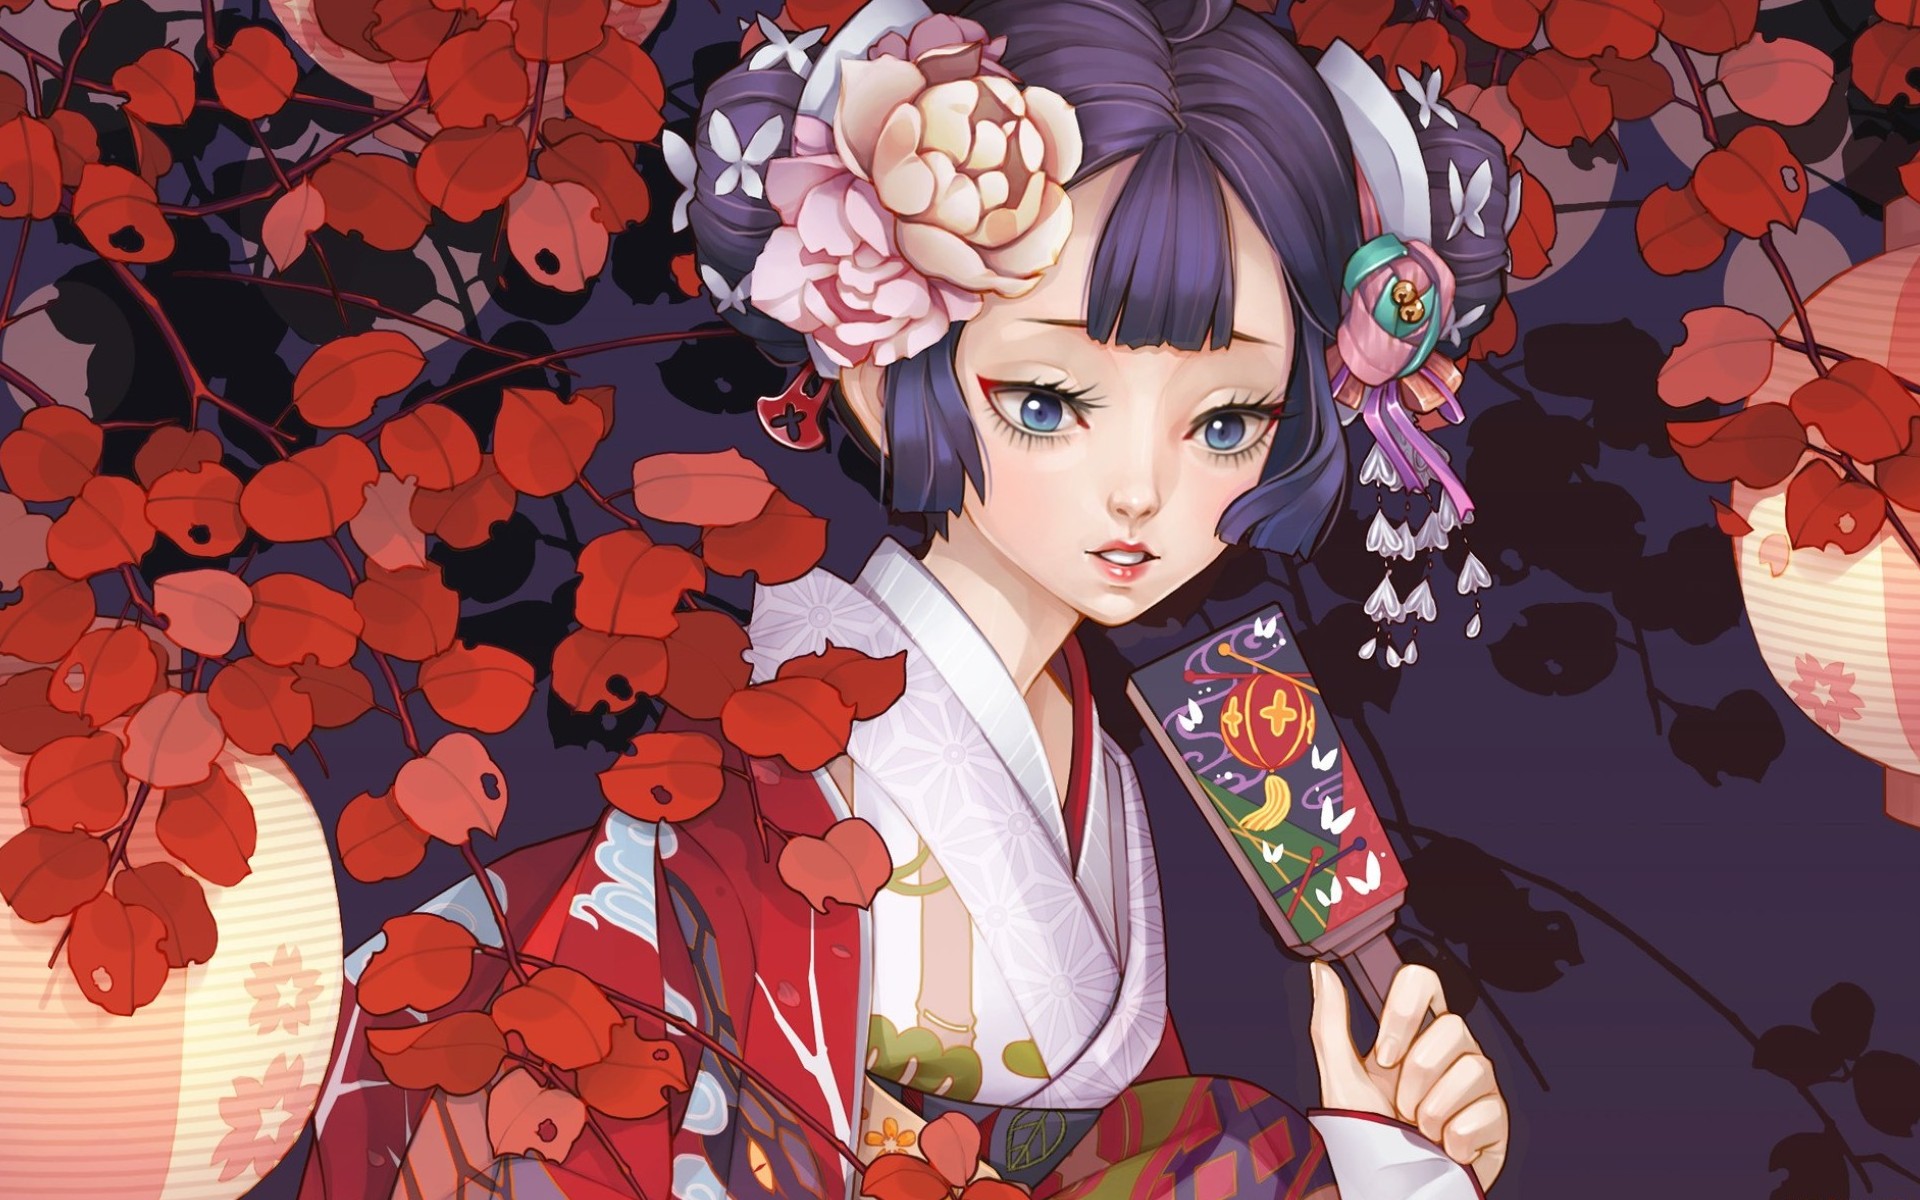 Descarga gratis la imagen Otoño, Flor, Kimono, Original, Animado en el escritorio de tu PC